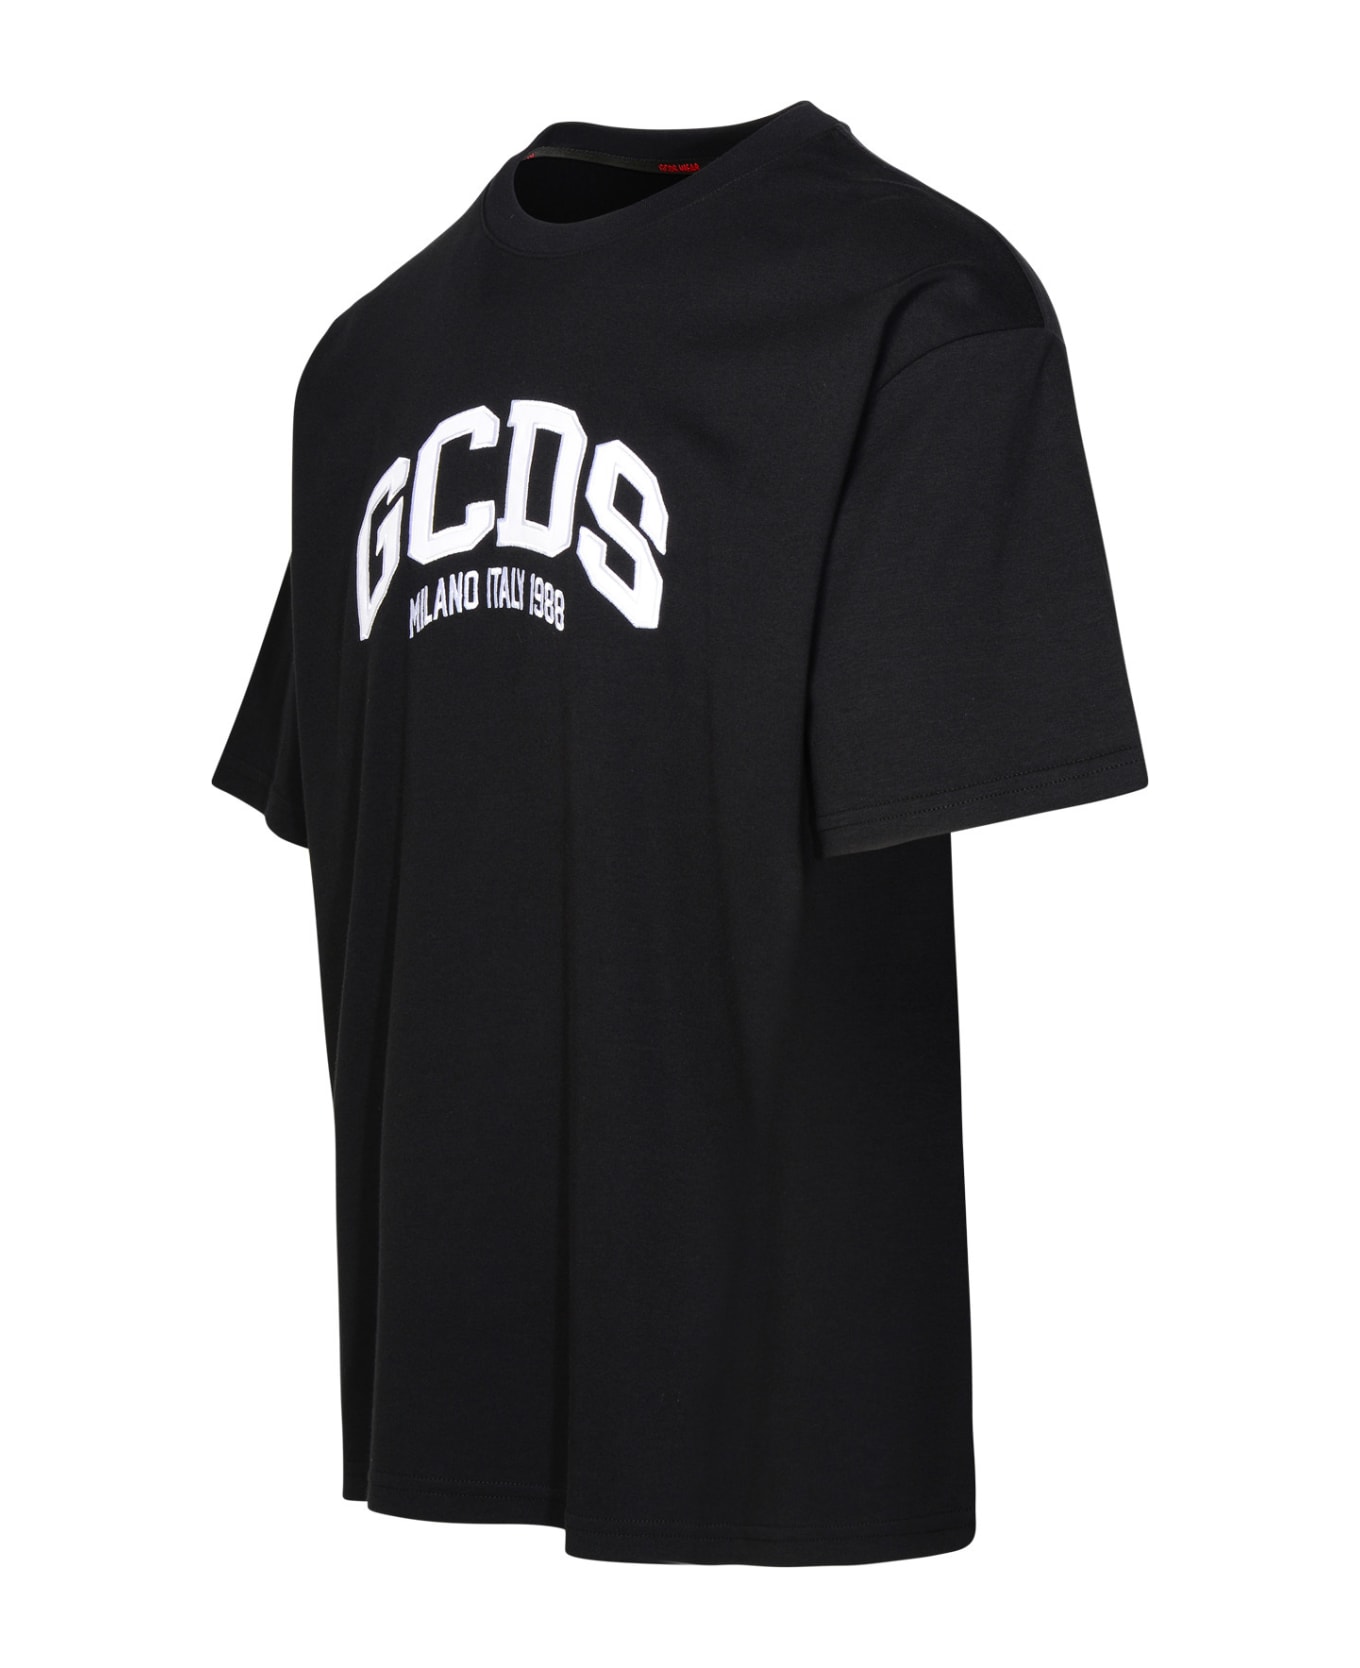 GCDS Black Cotton T-shirt - Nero